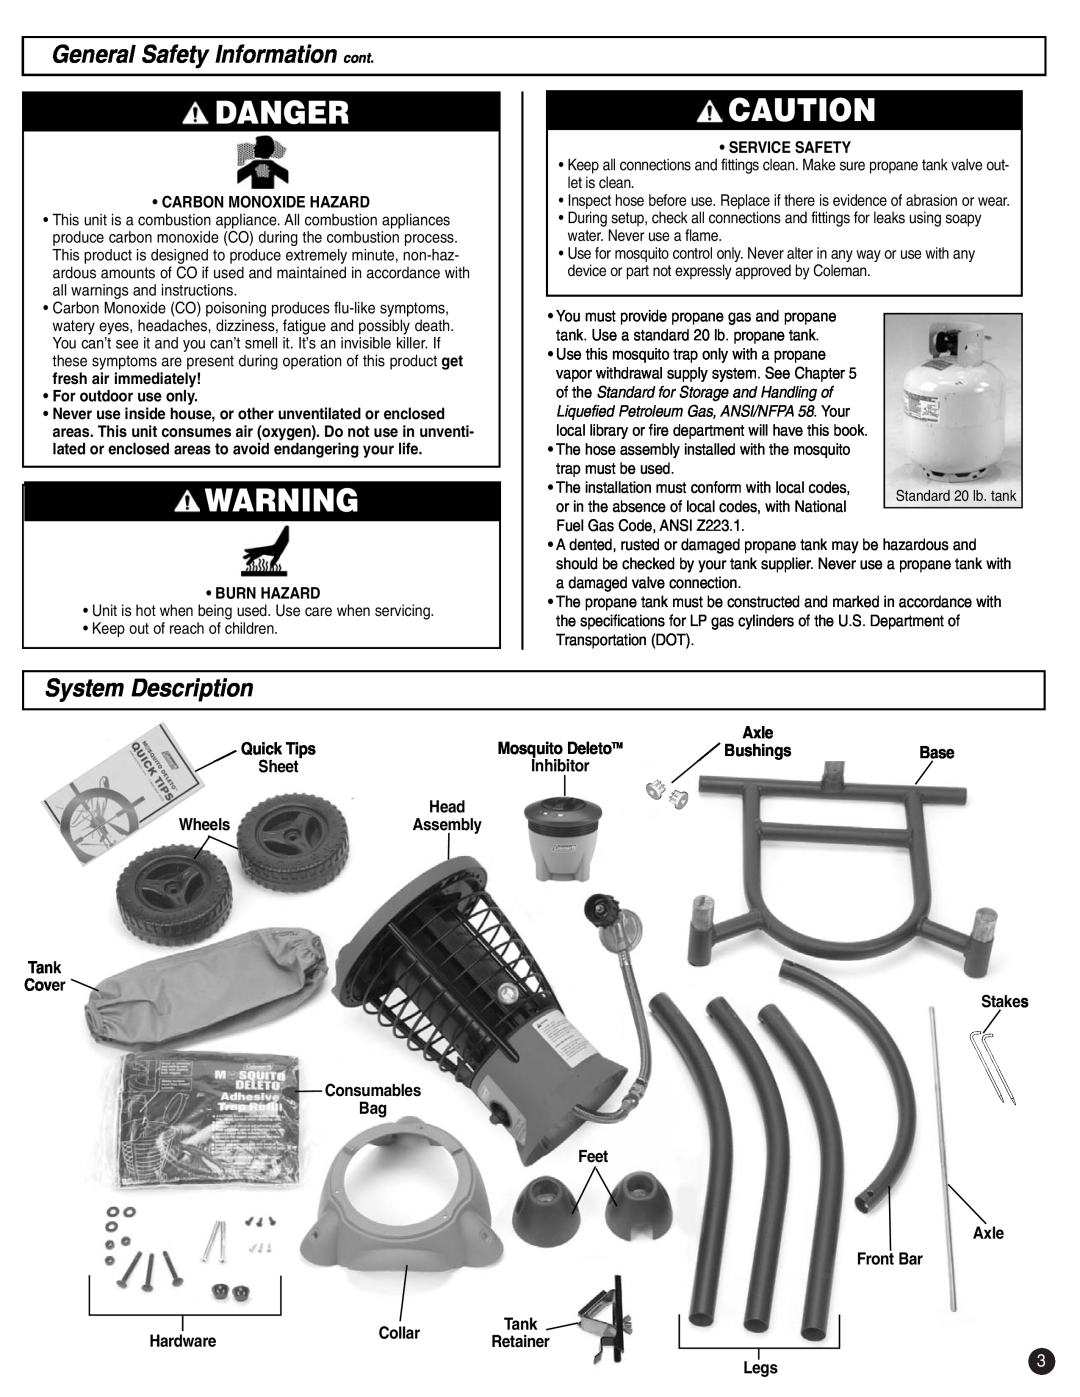 Coleman 8fa3 System Description, Wheels, Tank Cover Stakes Consumables Bag Feet Axle Front Bar, Hardware, Collar, Danger 